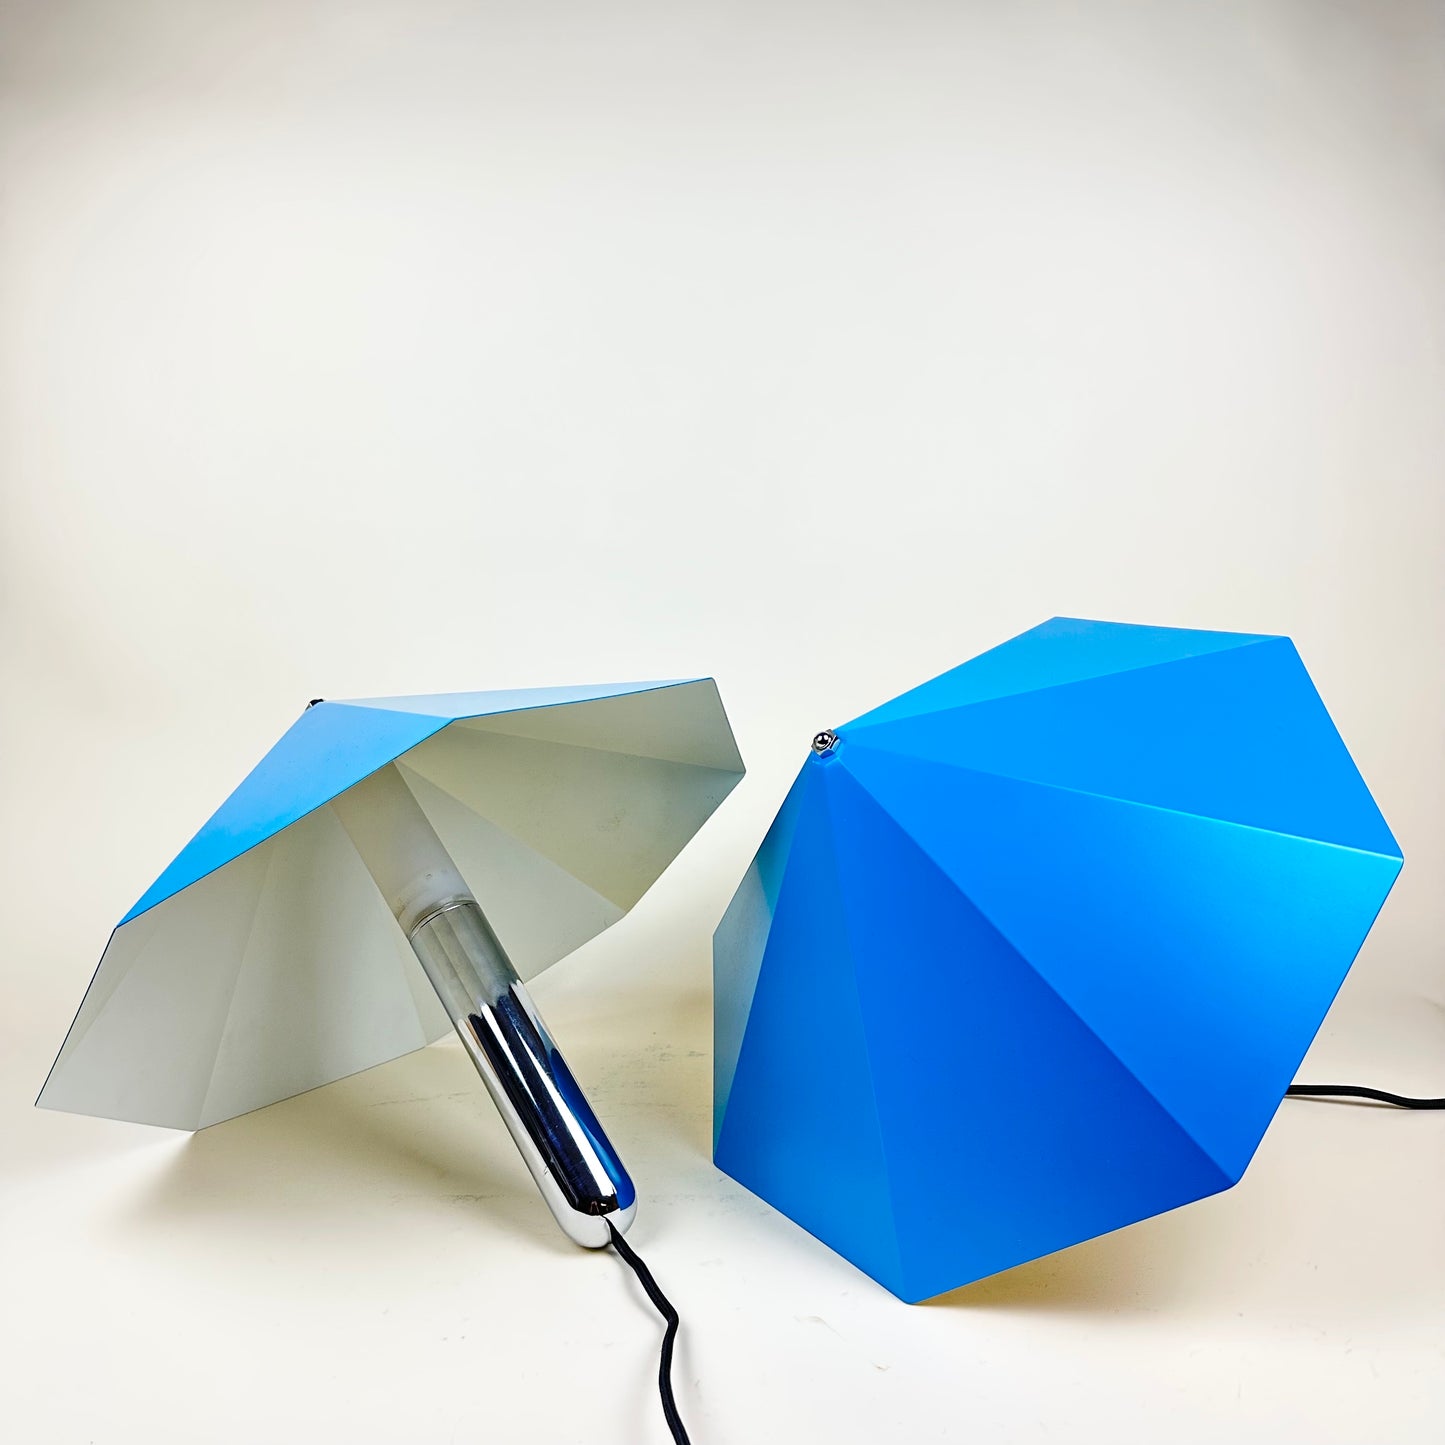 Pair of Parasol Lamps designed by Léa Padovani & Sébastien Kieffer